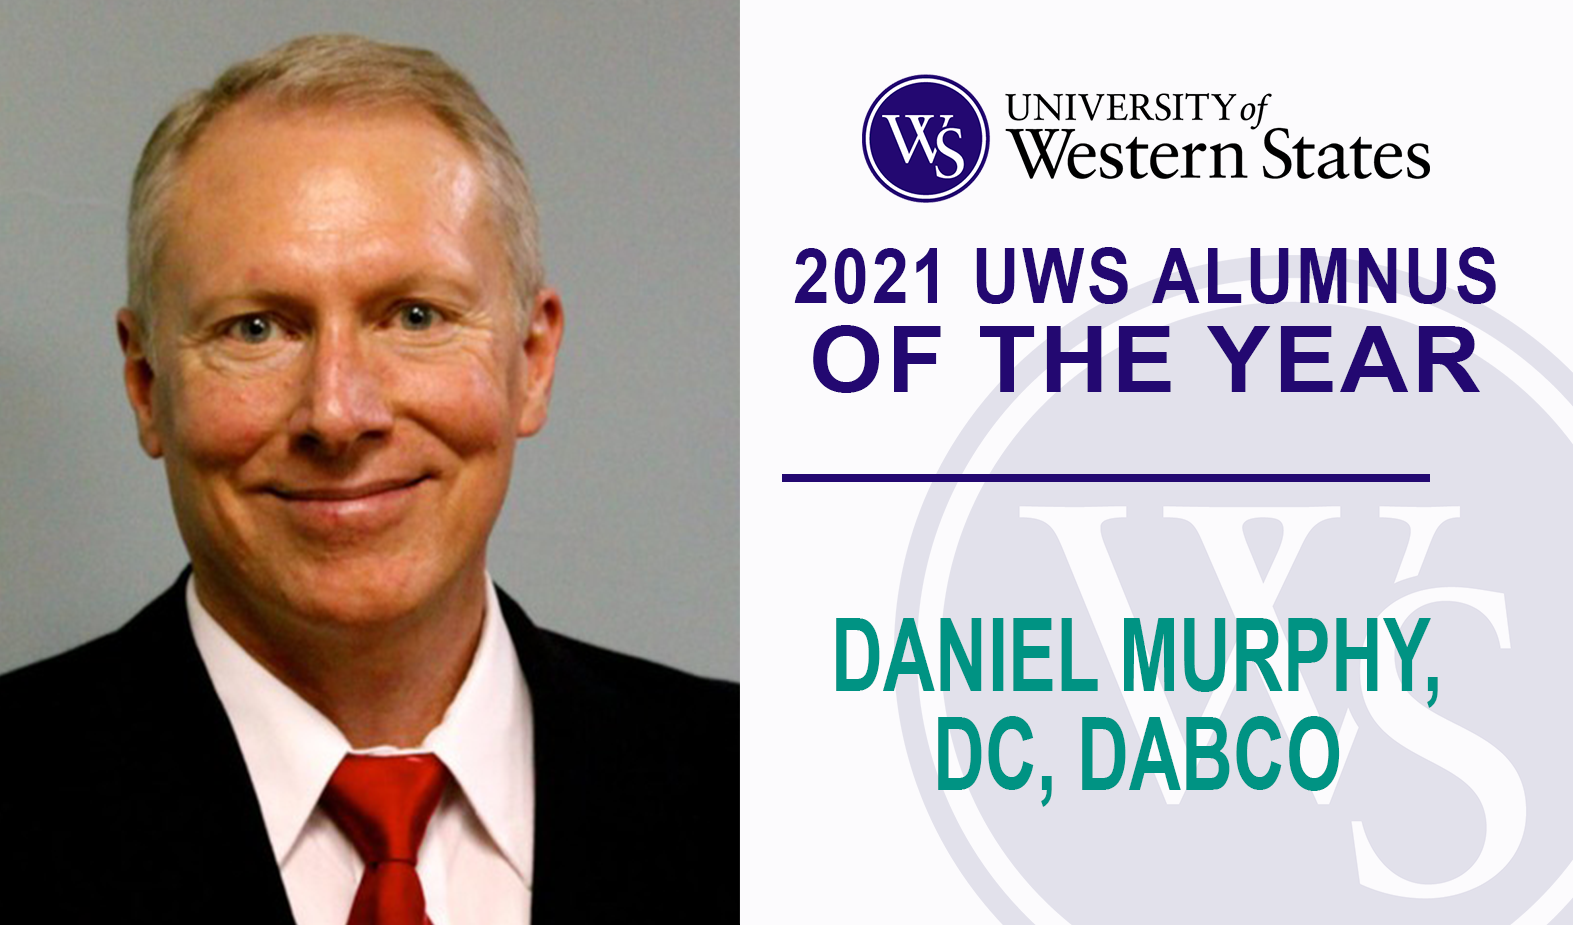 Daniel Murphy, DC, DABCO, Named 2021 UWS Alumnus of the Year - University  of Western States